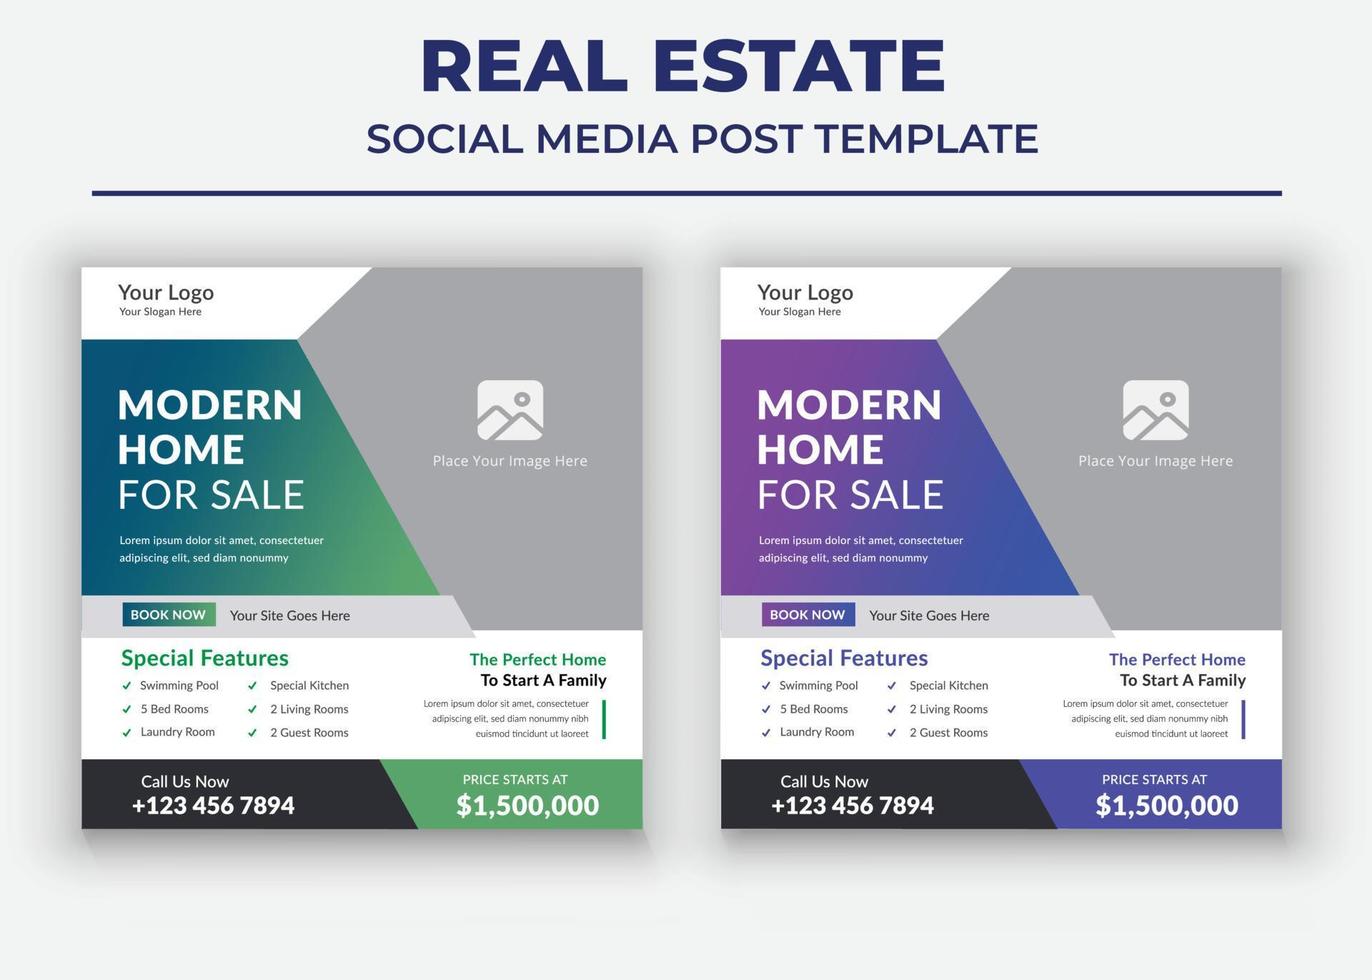 Modern Home For Sale poster, Real Estate Social Media Template vector